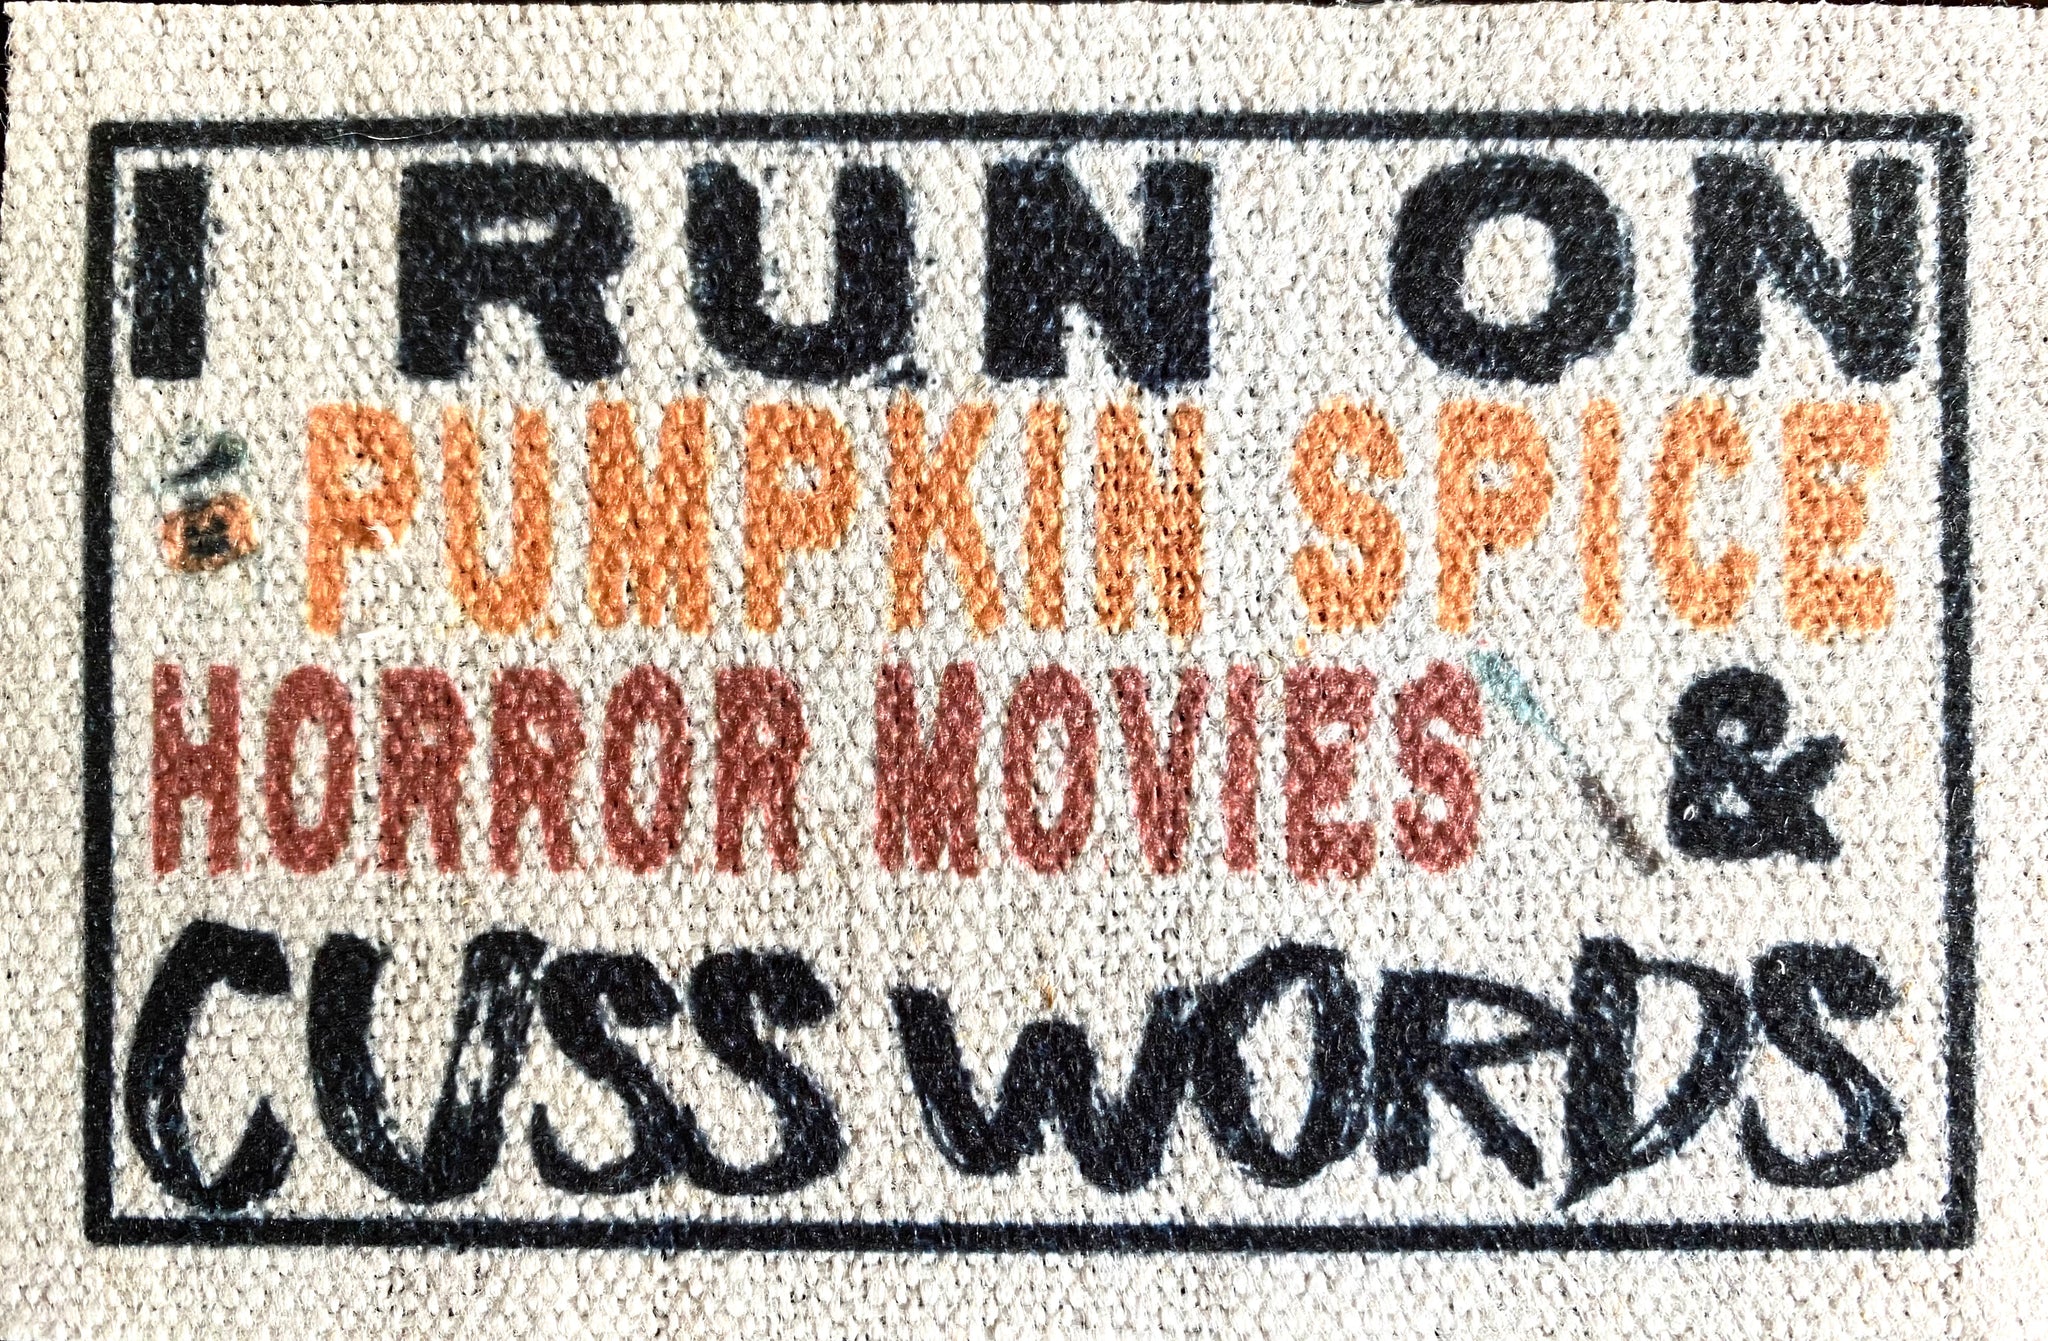 Pumpkin Spice, Horror Movies, & Cuss Words